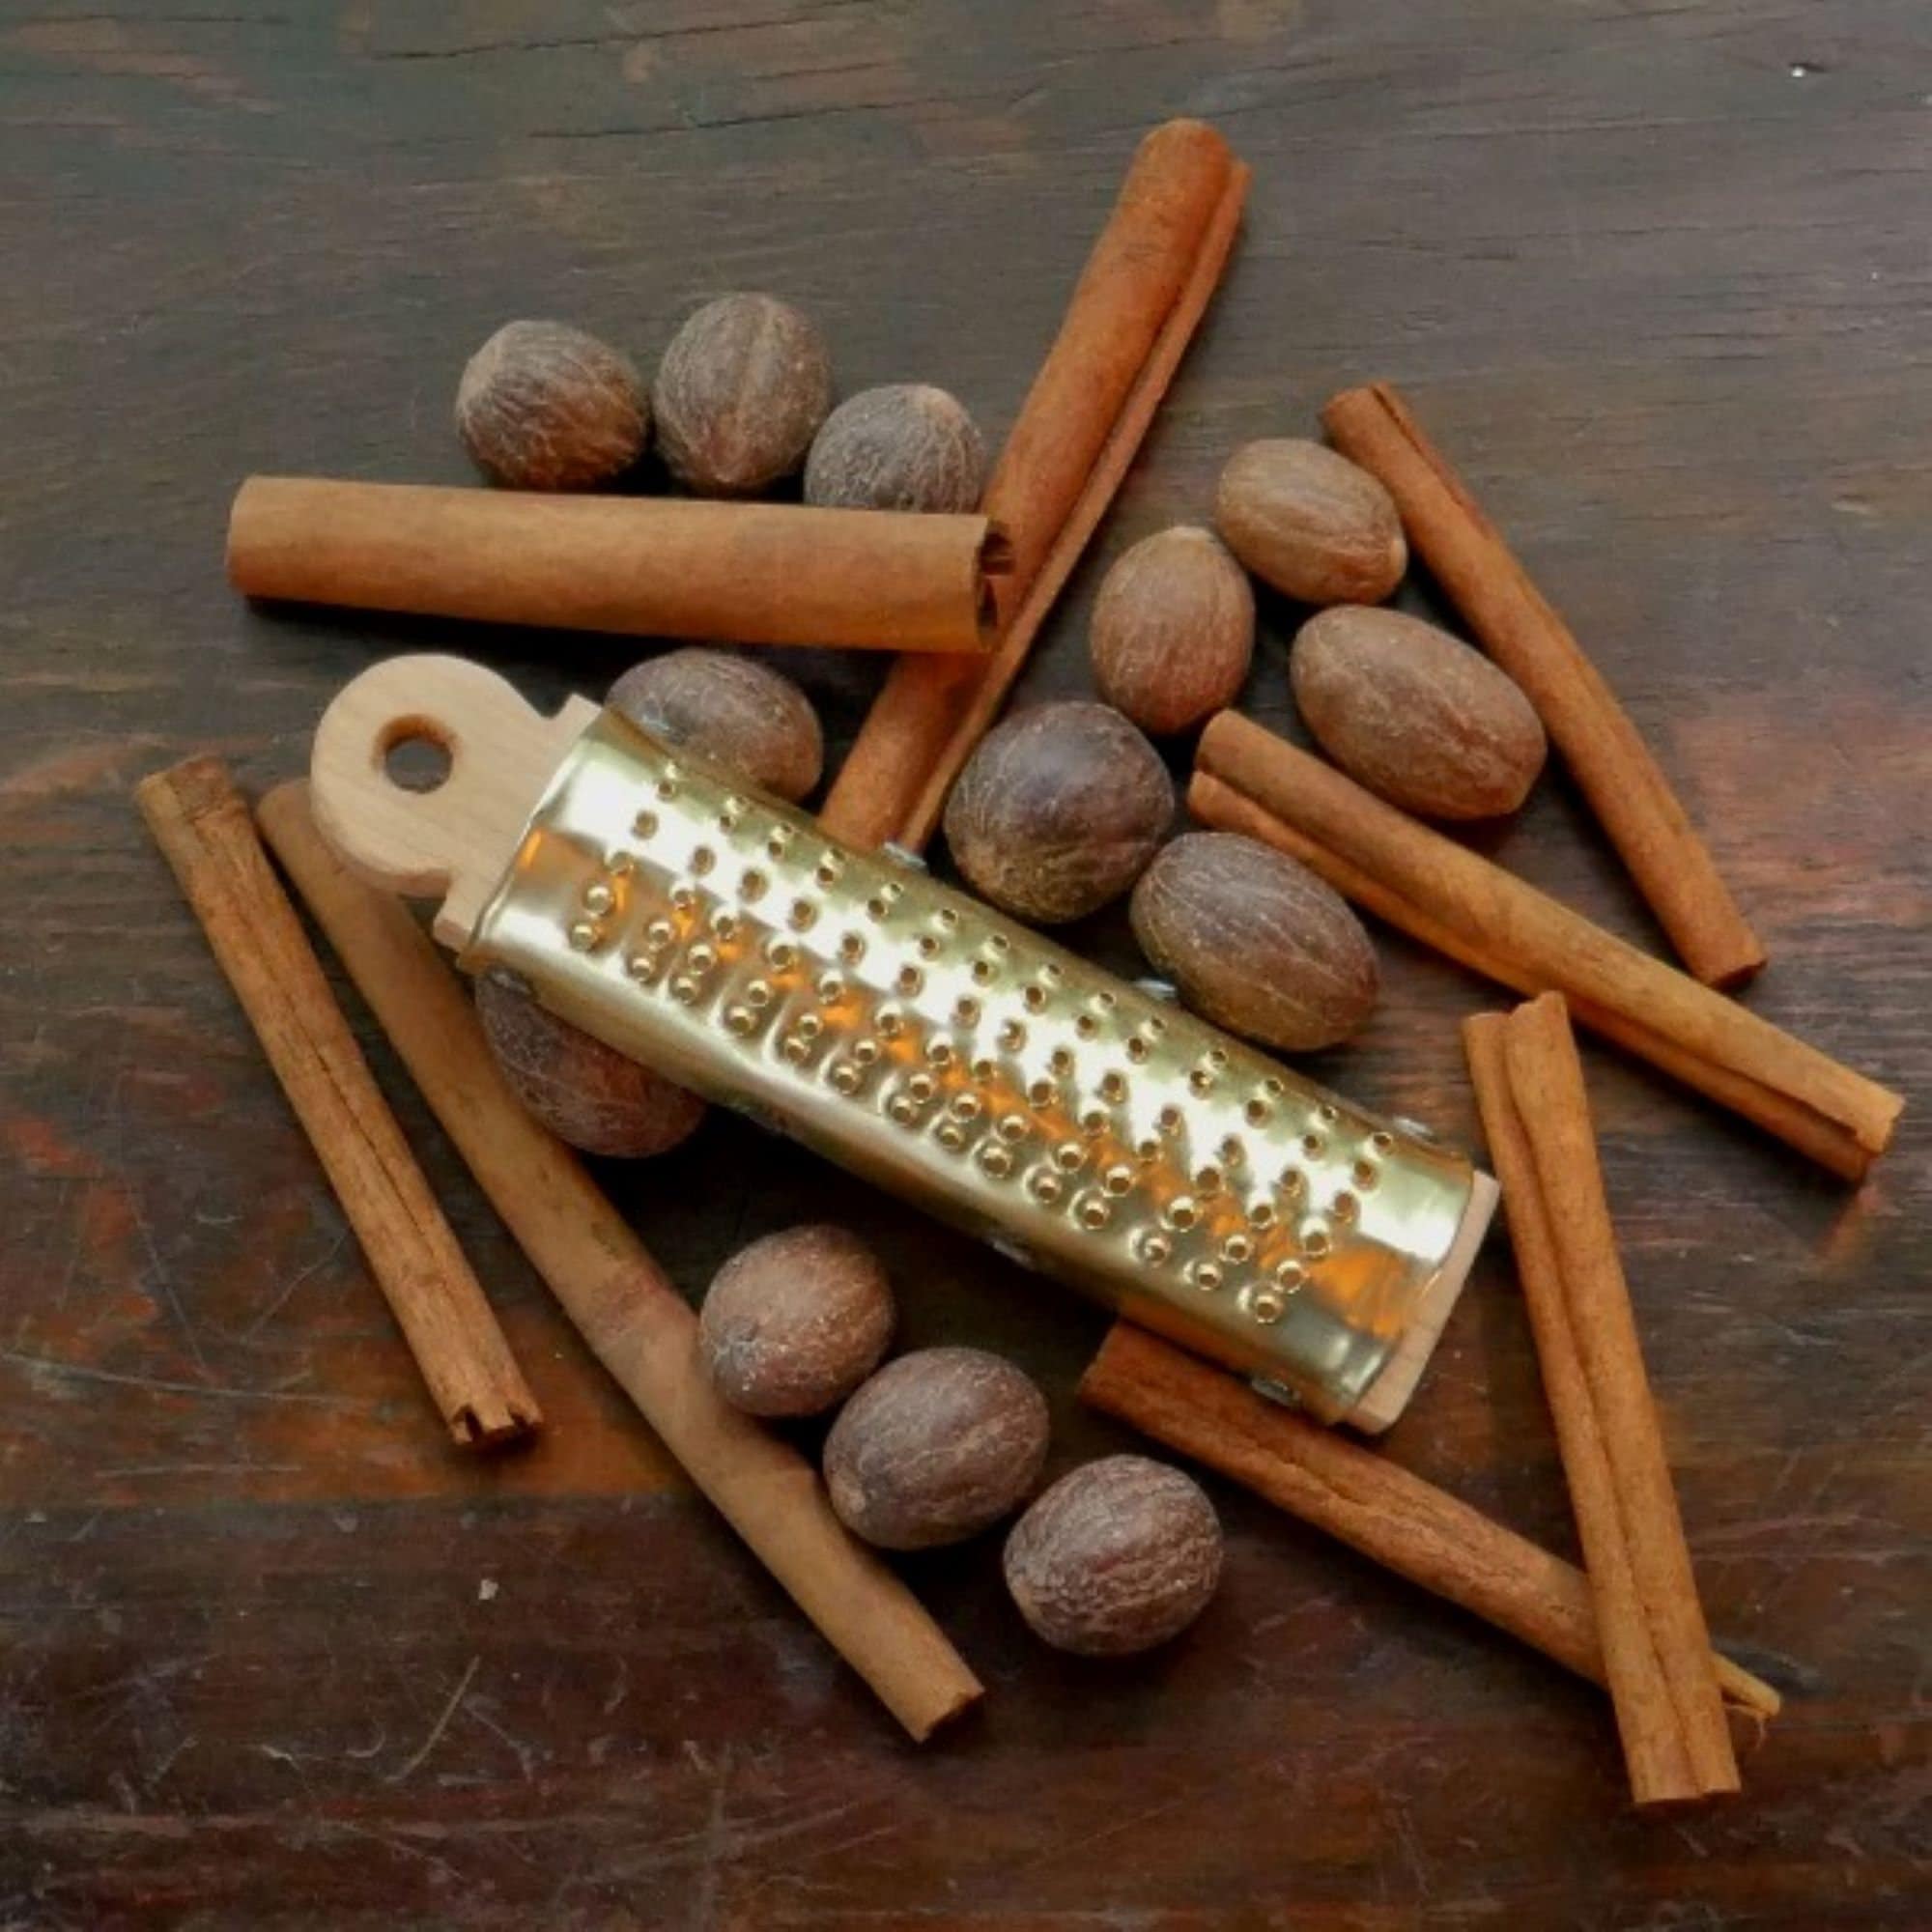 Spice Mill - Nutmeg Grinder and Cinnamon Grinder